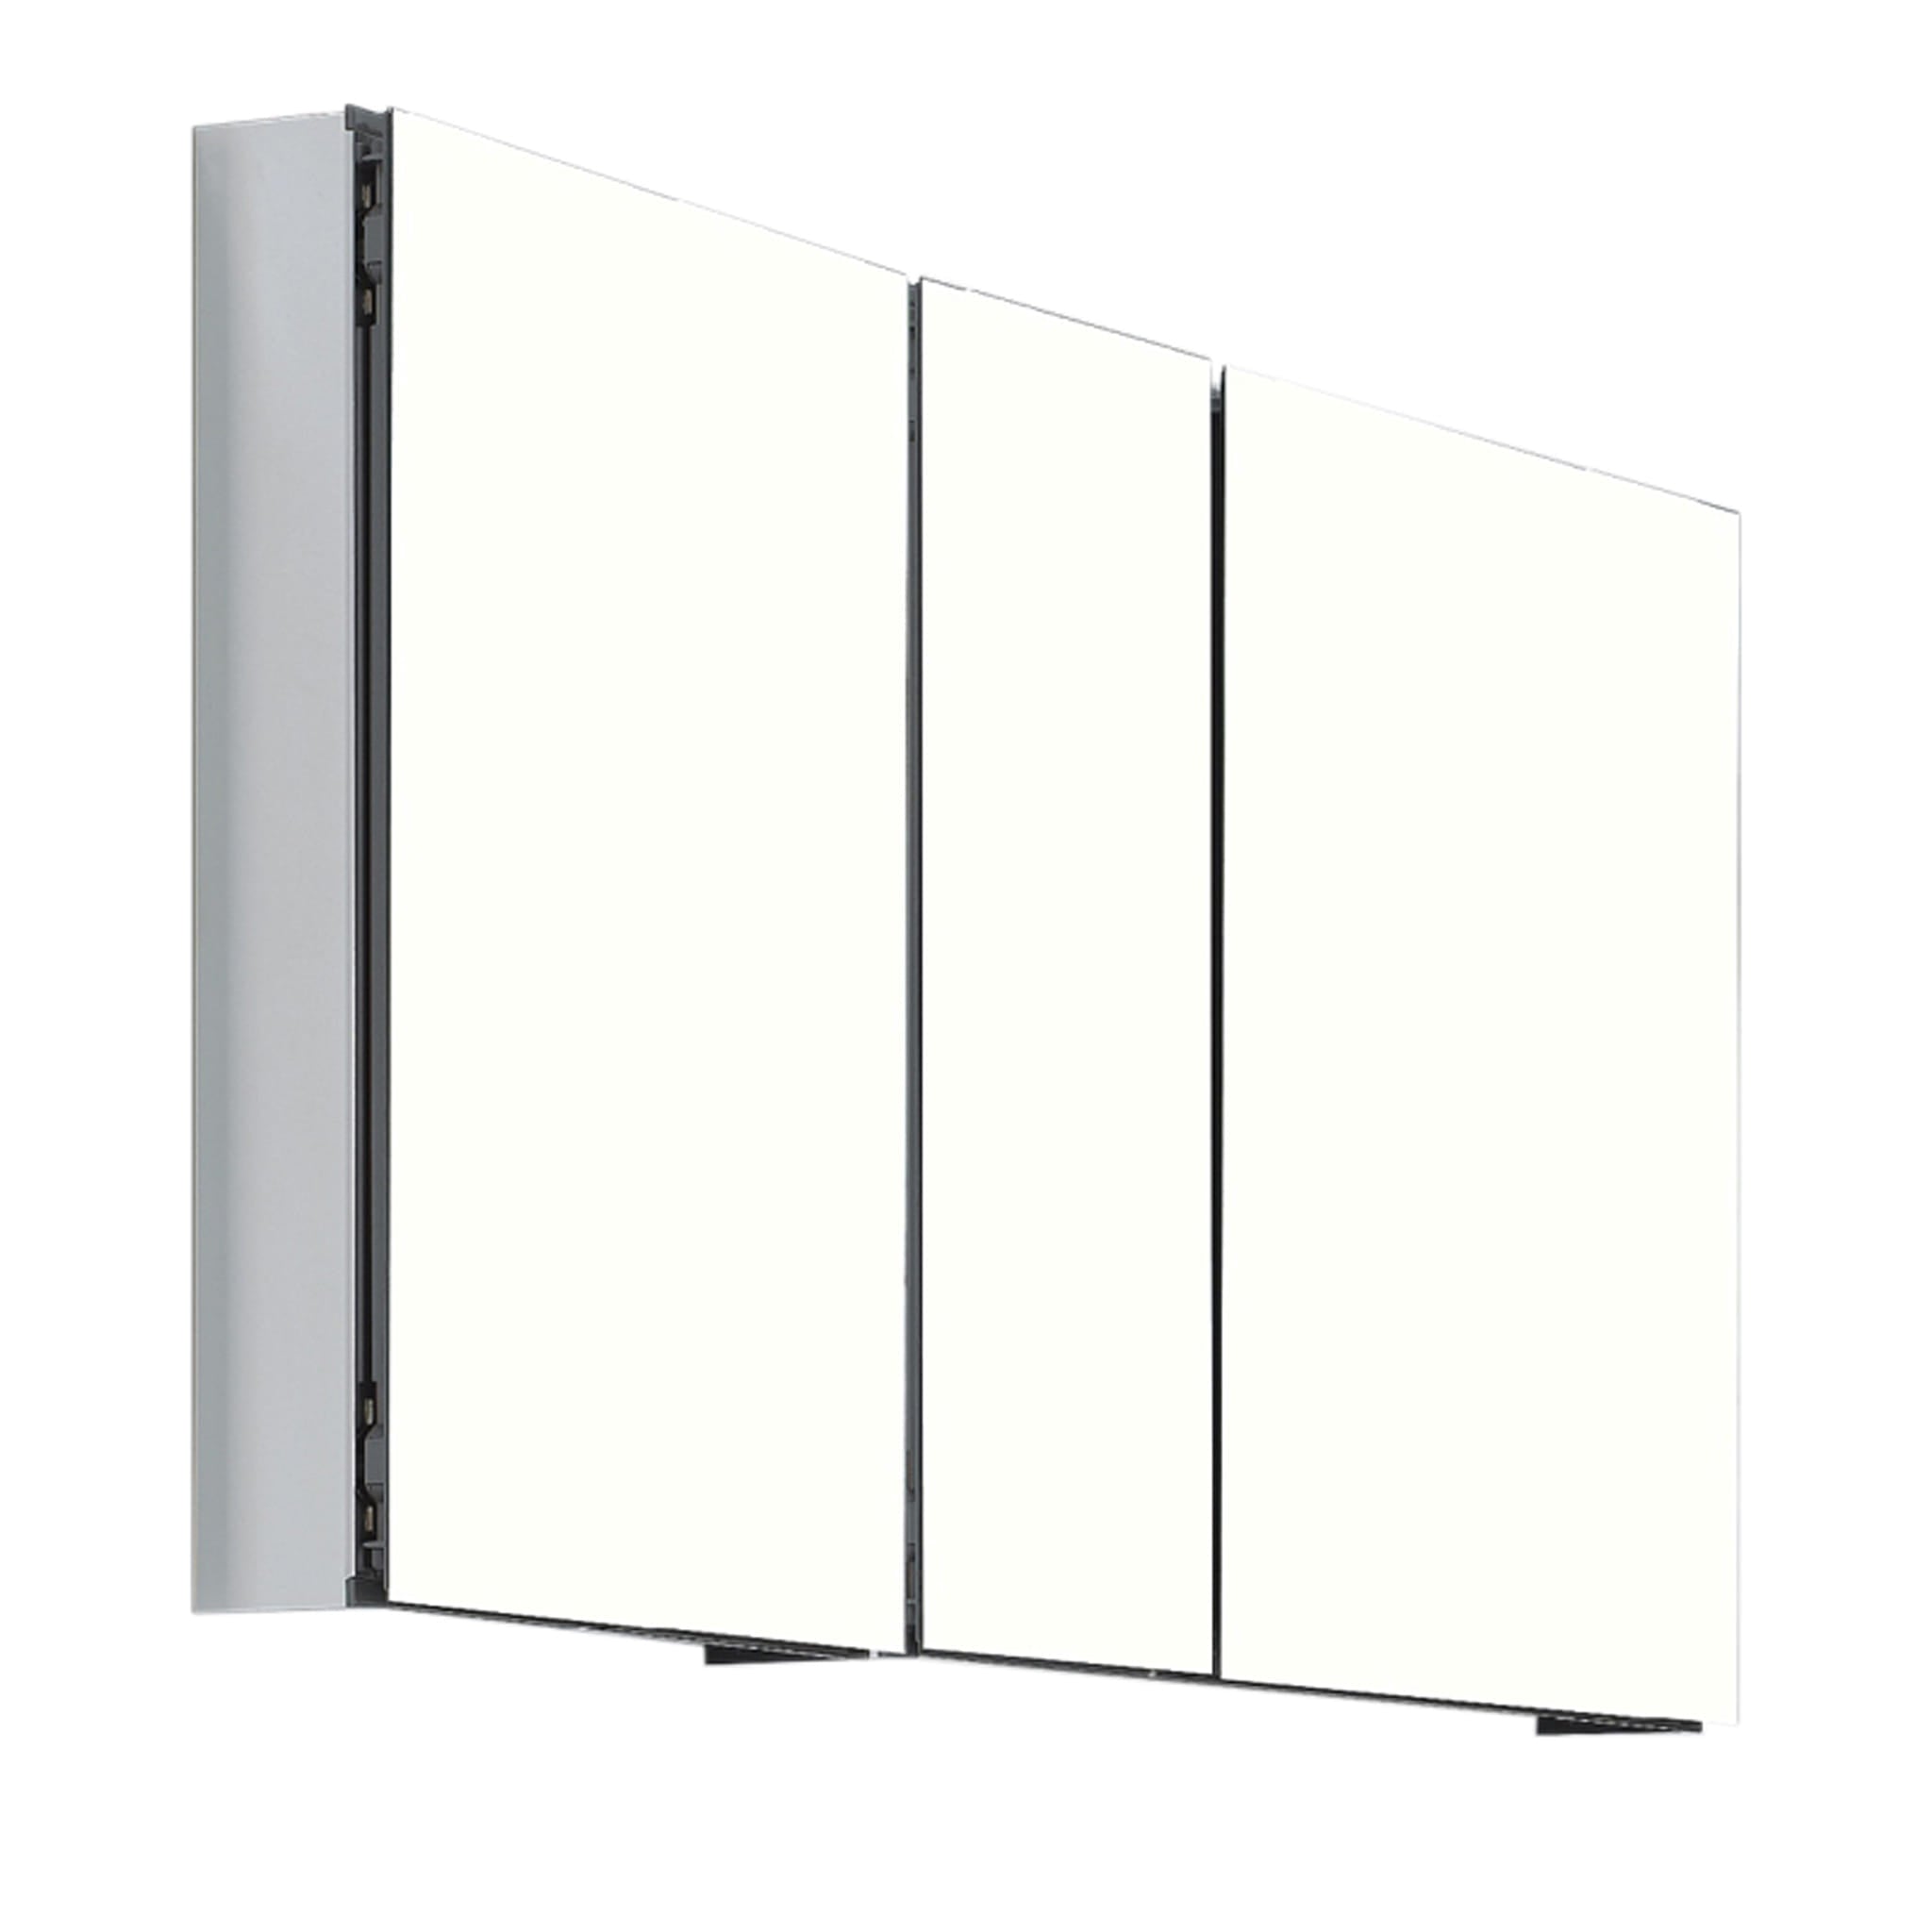 Aquamoon MM50 Frameless Plain 50" x26" Bathroom Medicine Cabinet Mirror Recess or Wall Mounted Installation